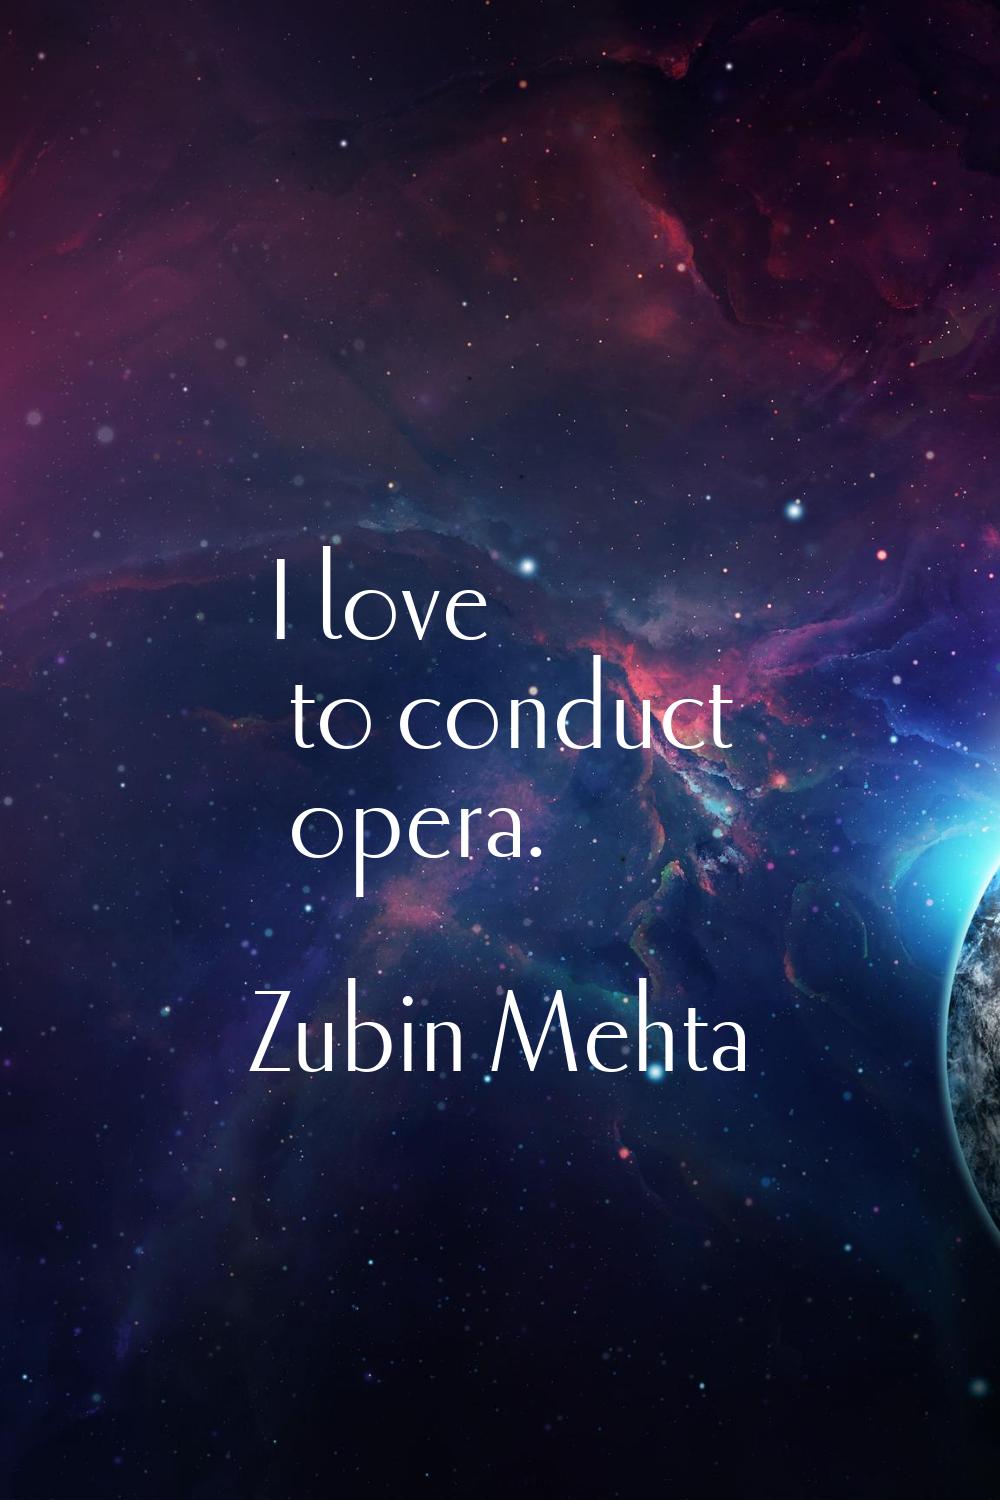 I love to conduct opera.